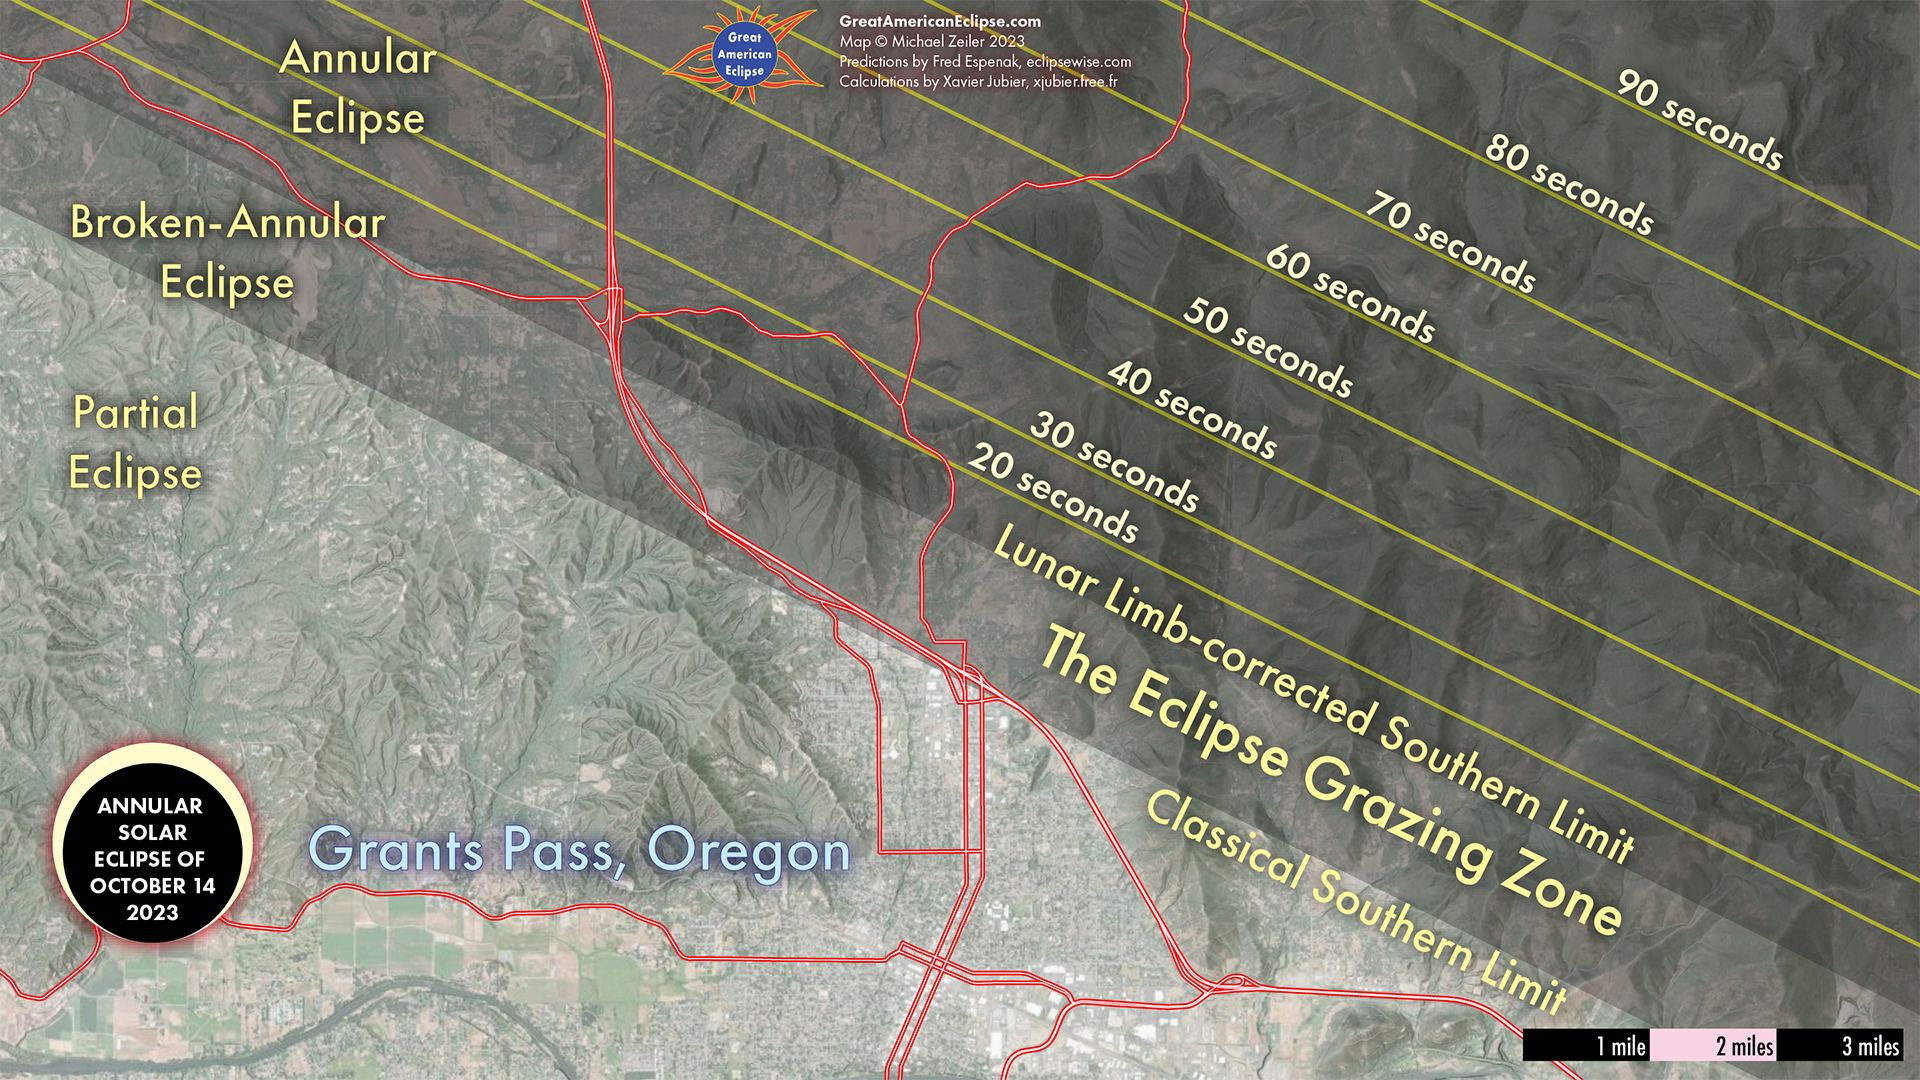 Map illustration showing grazing areas around Grants Pass, Oregon.